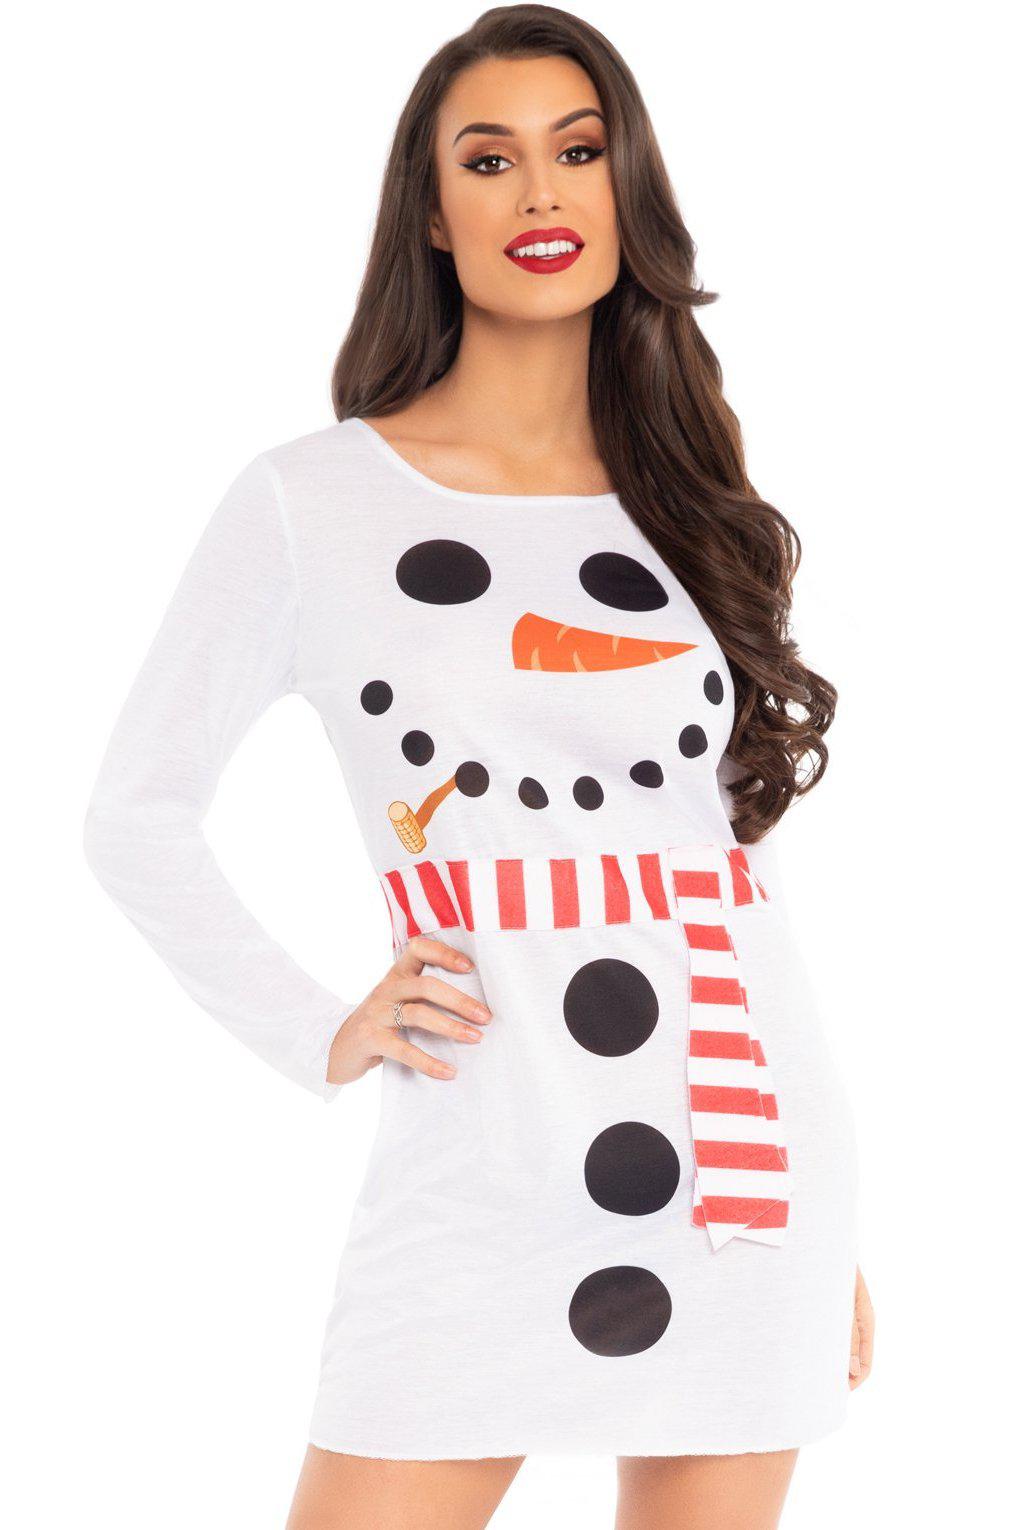 Snowman T-Shirt Dress-Holiday Costumes-Leg Avenue-White-XL-SEXYSHOES.COM